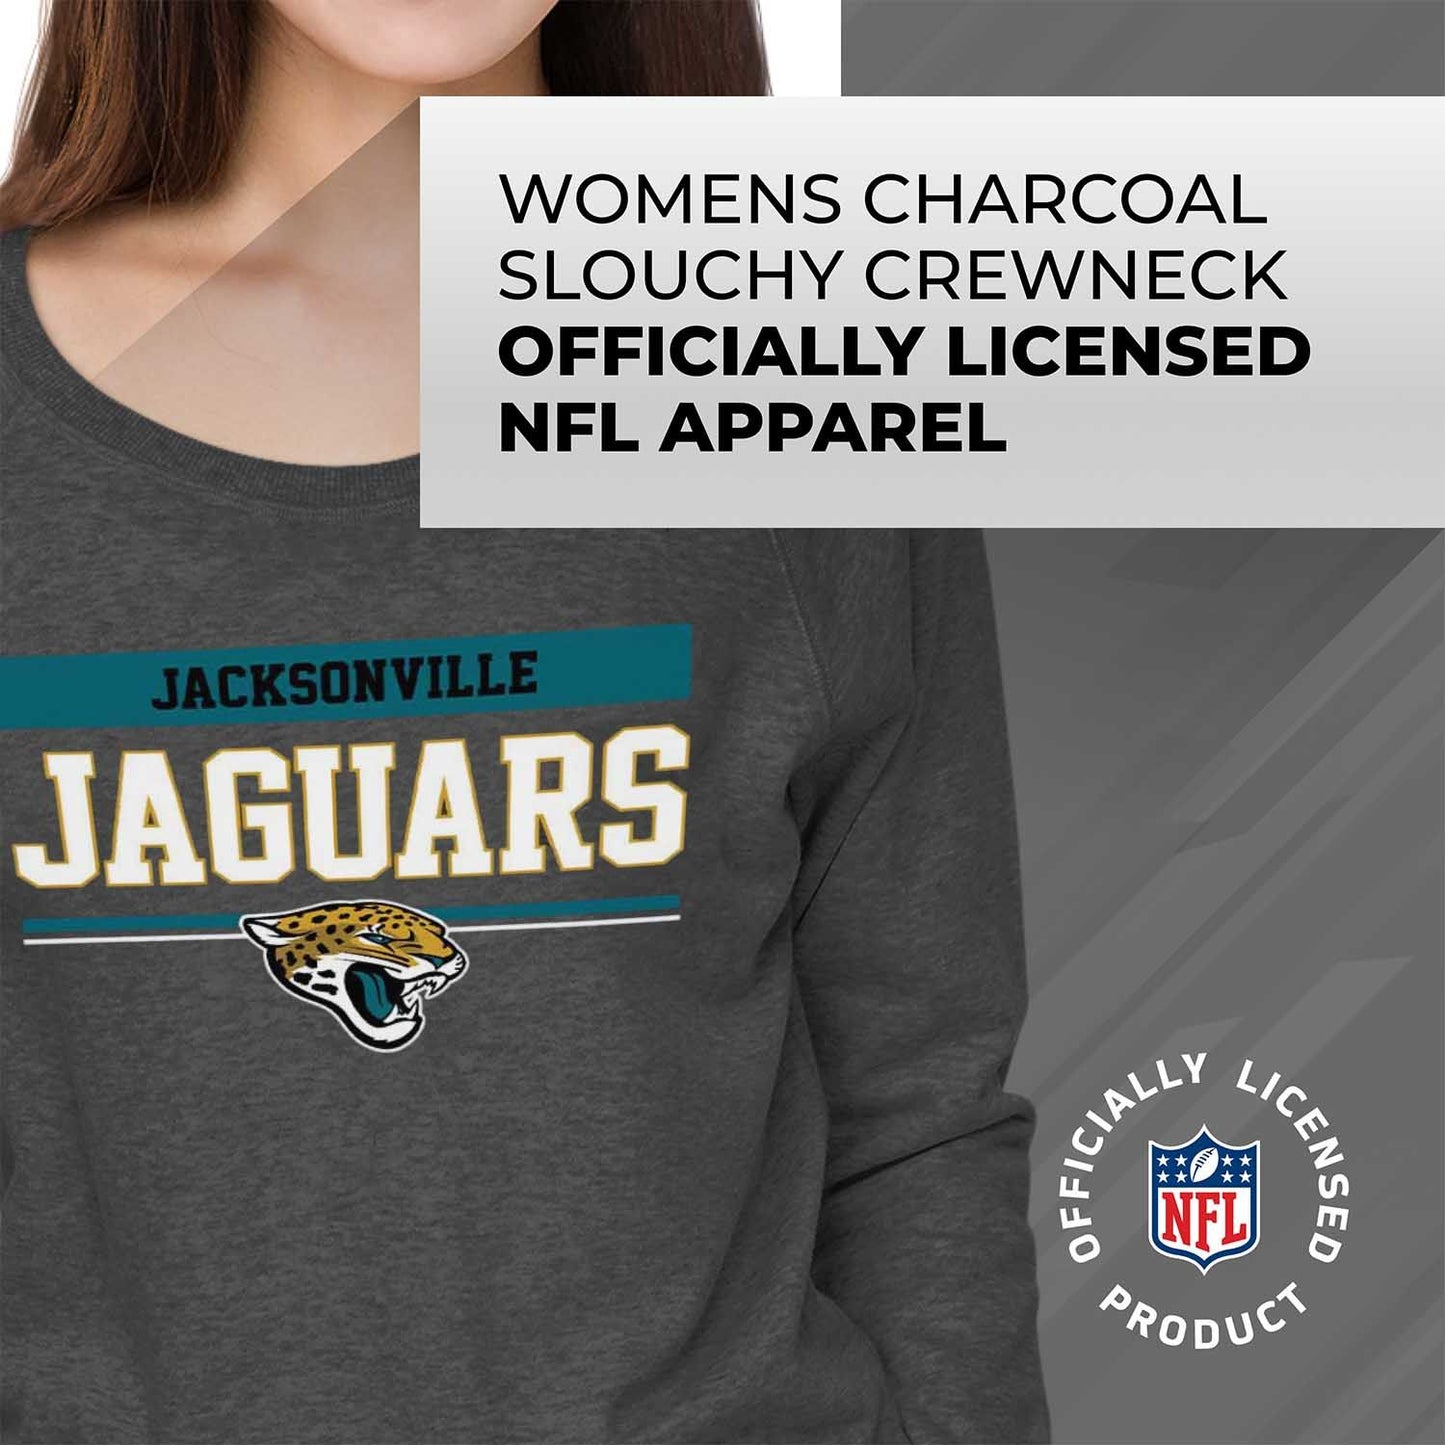 Jacksonville Jaguars NFL Womens Charcoal Crew Neck Football Apparel - Charcoal